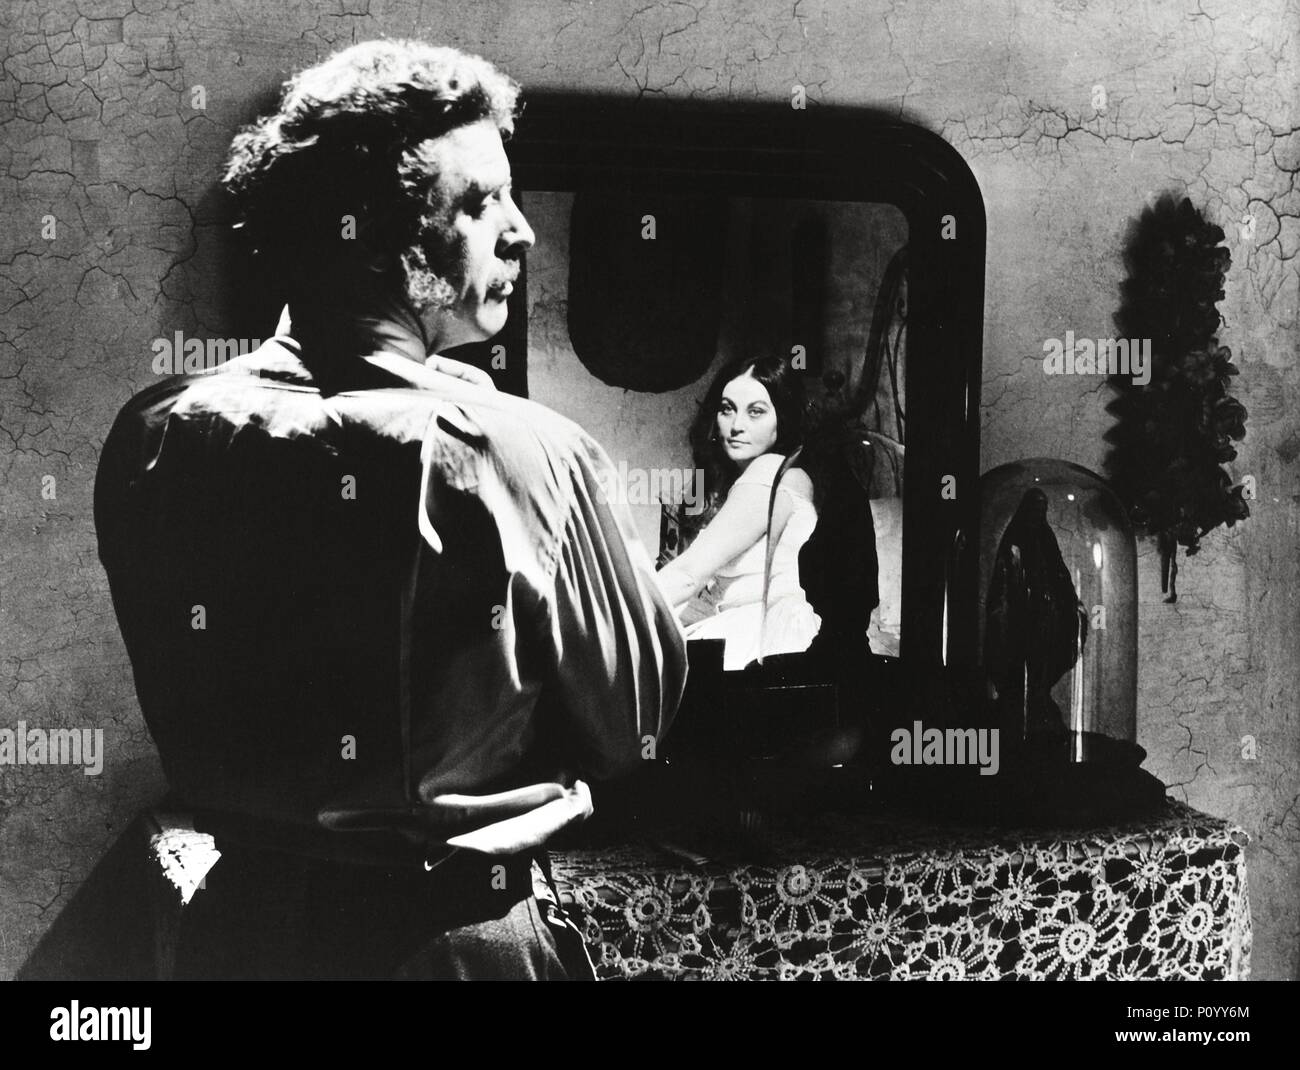 Original Film Title: IL GATTOPARDO.  English Title: LEOPARD, THE.  Film Director: LUCHINO VISCONTI.  Year: 1963.  Stars: BURT LANCASTER. Credit: TITANUS / Album Stock Photo